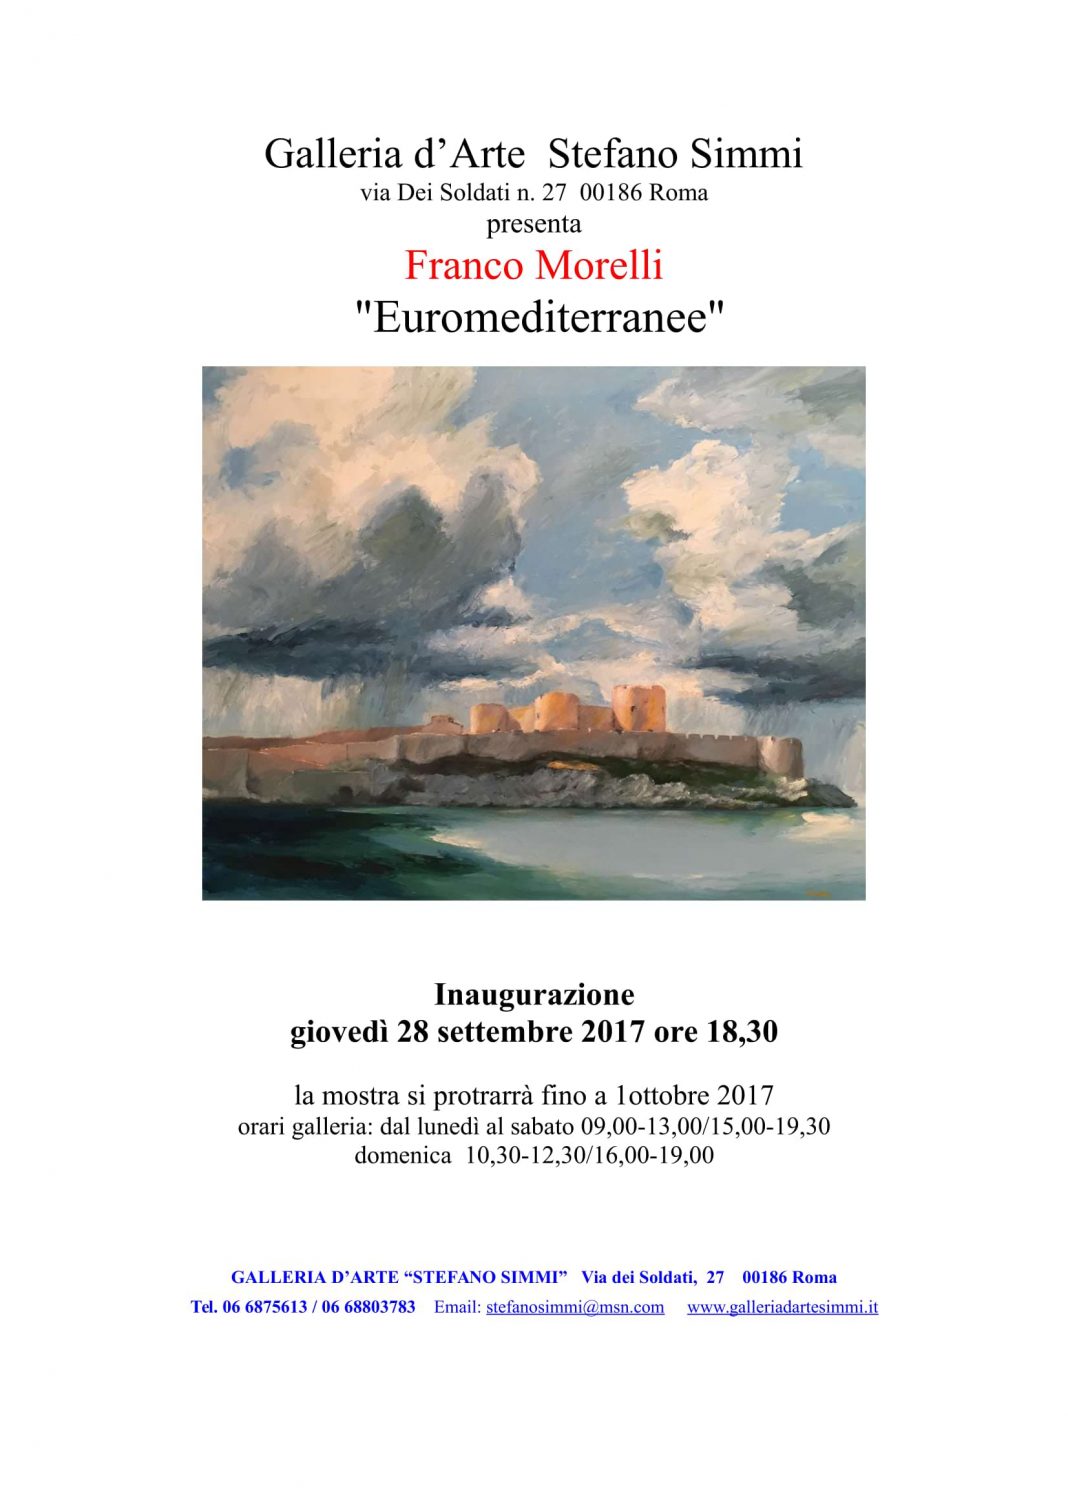 Franco Morelli – Euromediterraneehttps://www.exibart.com/repository/media/eventi/2017/09/franco-morelli-8211-euromediterranee-1068x1511.jpg